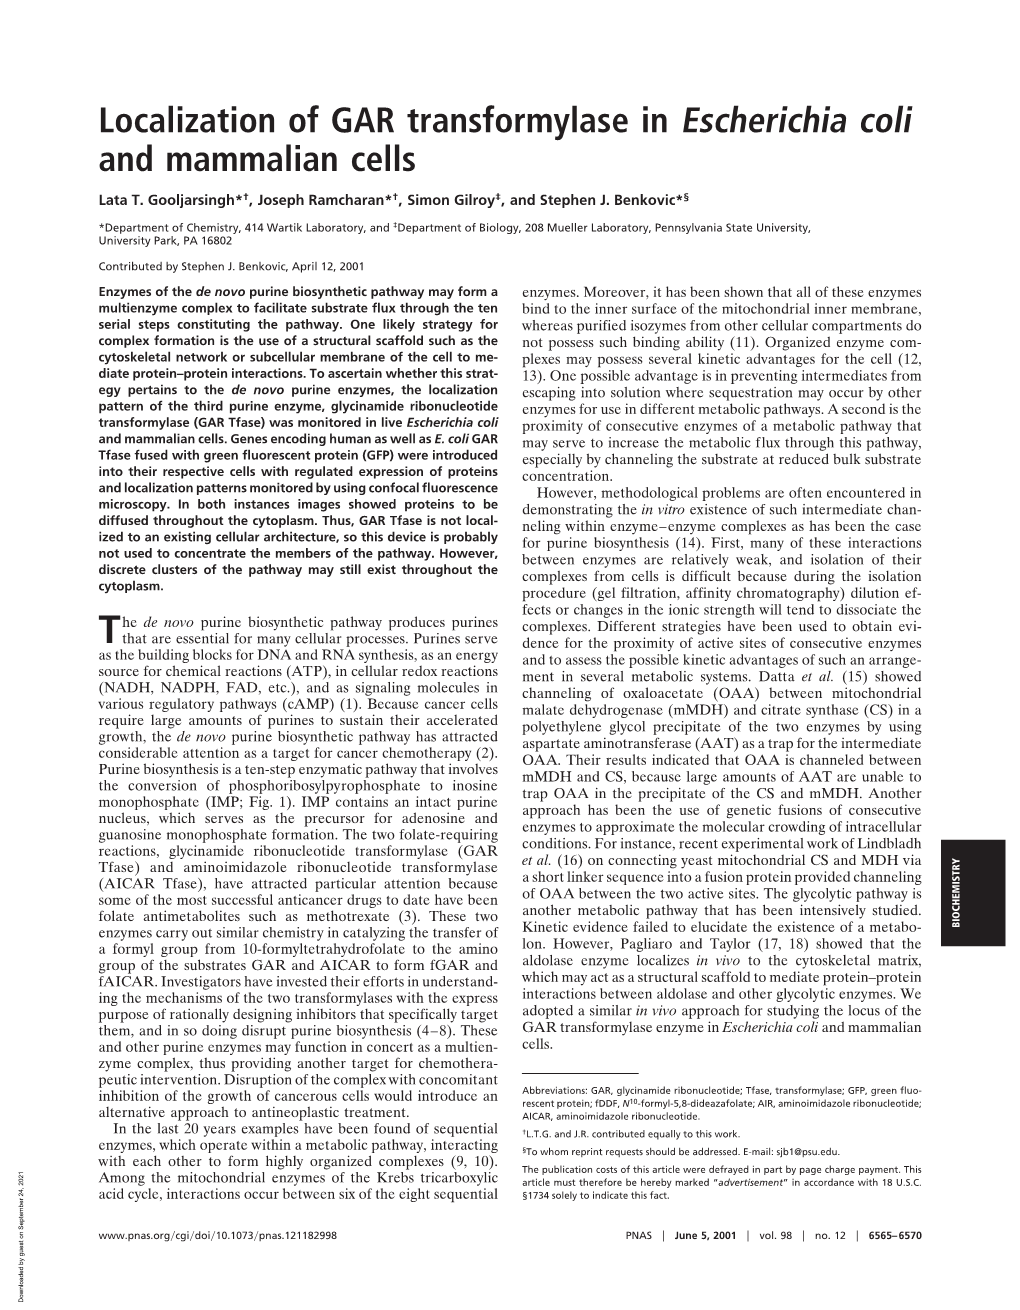 Localization of GAR Transformylase in Escherichia Coli and Mammalian Cells